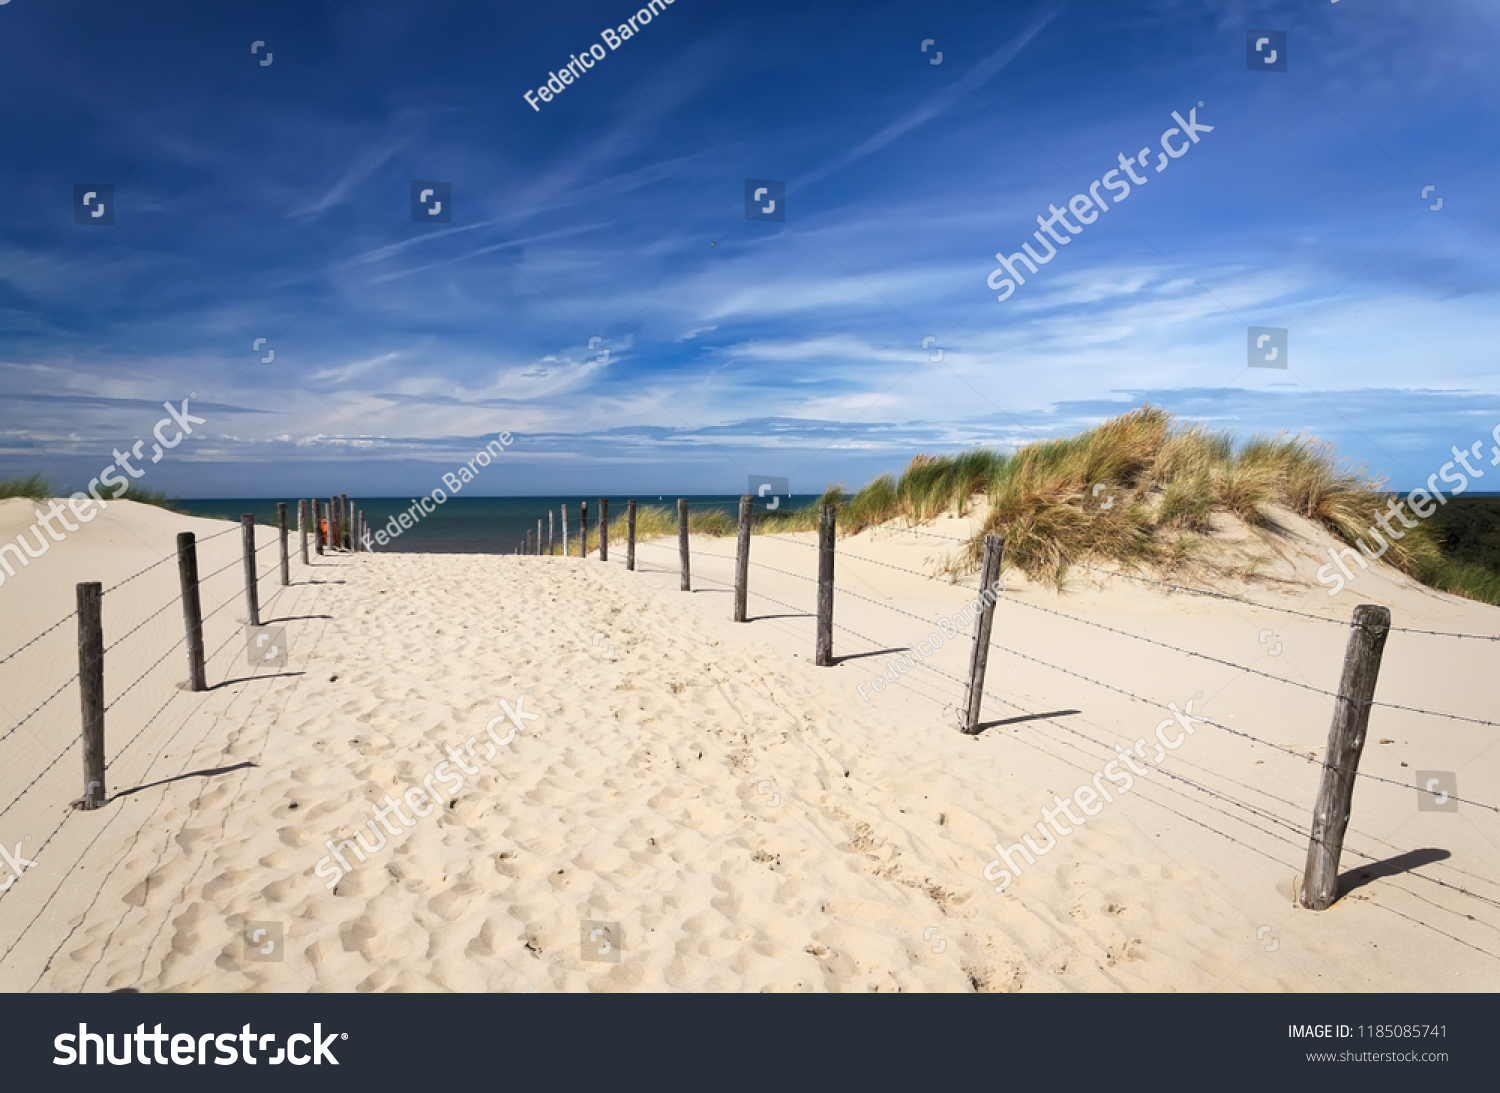 stock-photo-beach-and-blue-sky-wonderful